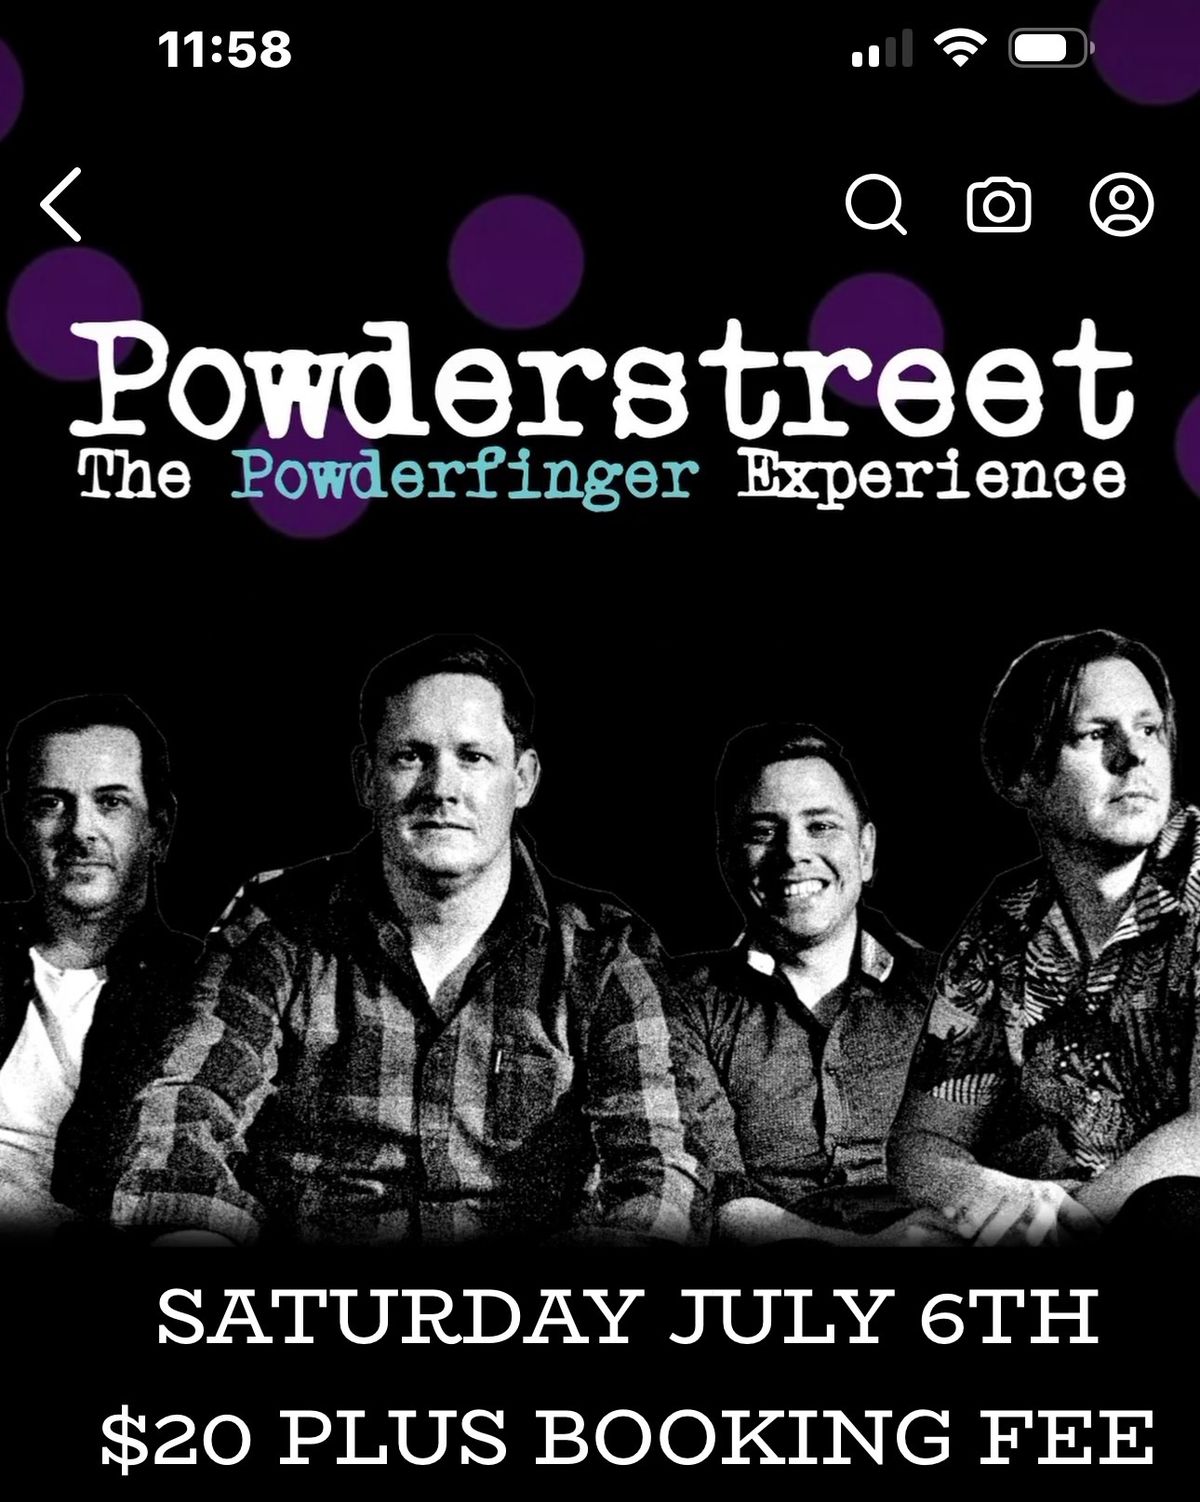 Powderstreet- Powderfinger tribute show- along with Silverchair tribute show